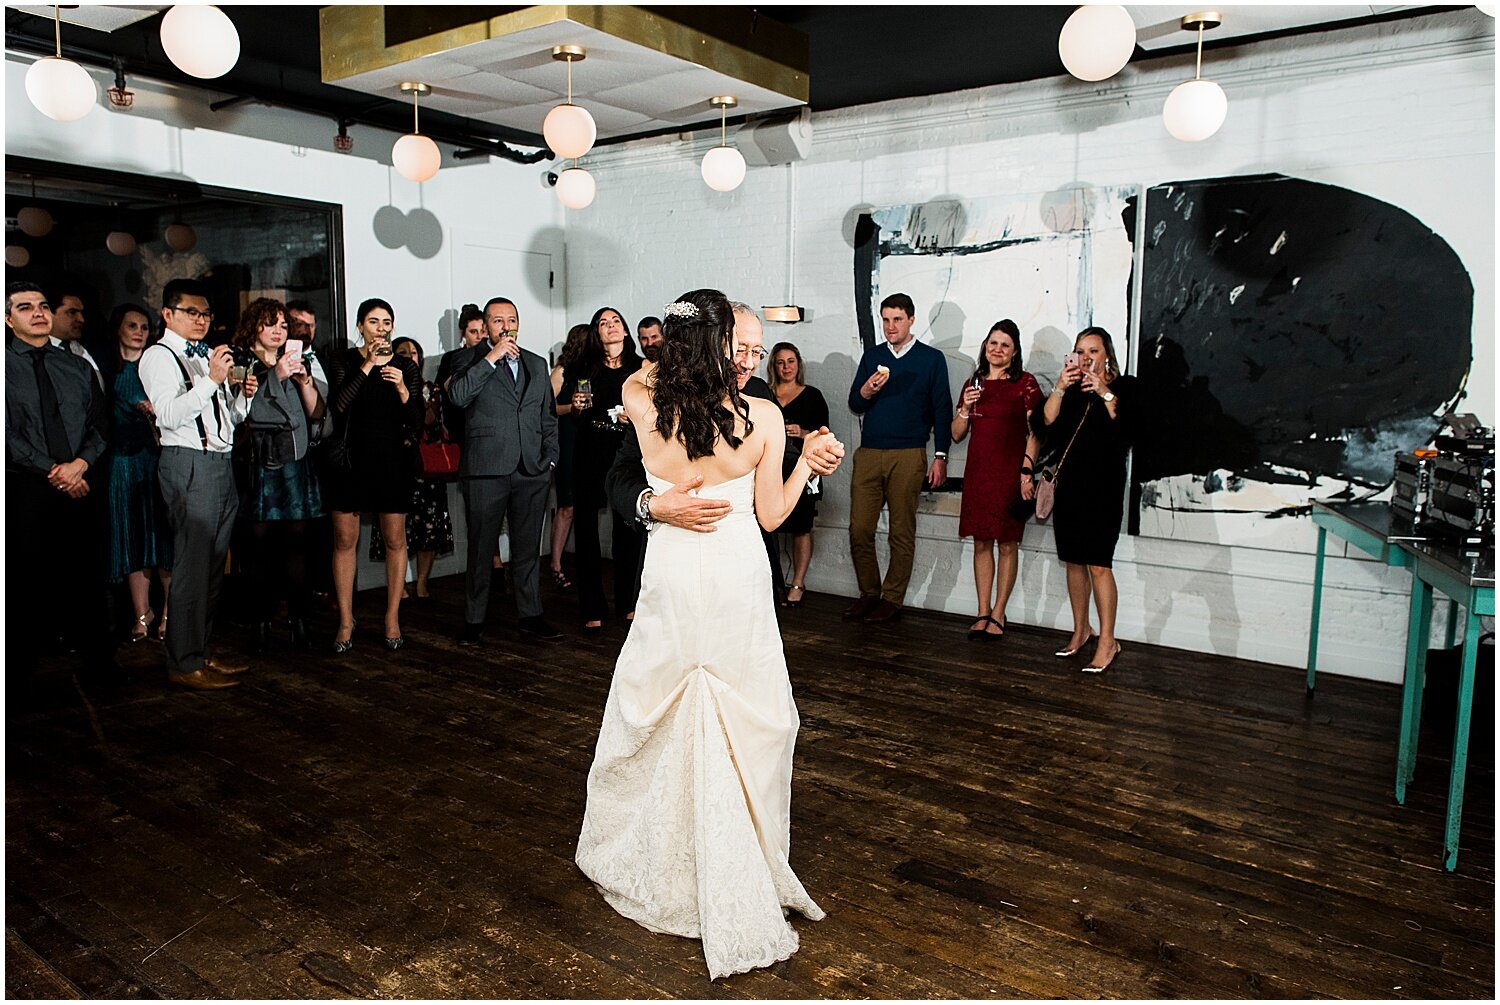 Havens-Kitchen-Wedding-Venue-NYC-Apollo-Fields-Weddings-Photographers-New-York-City-103.jpg